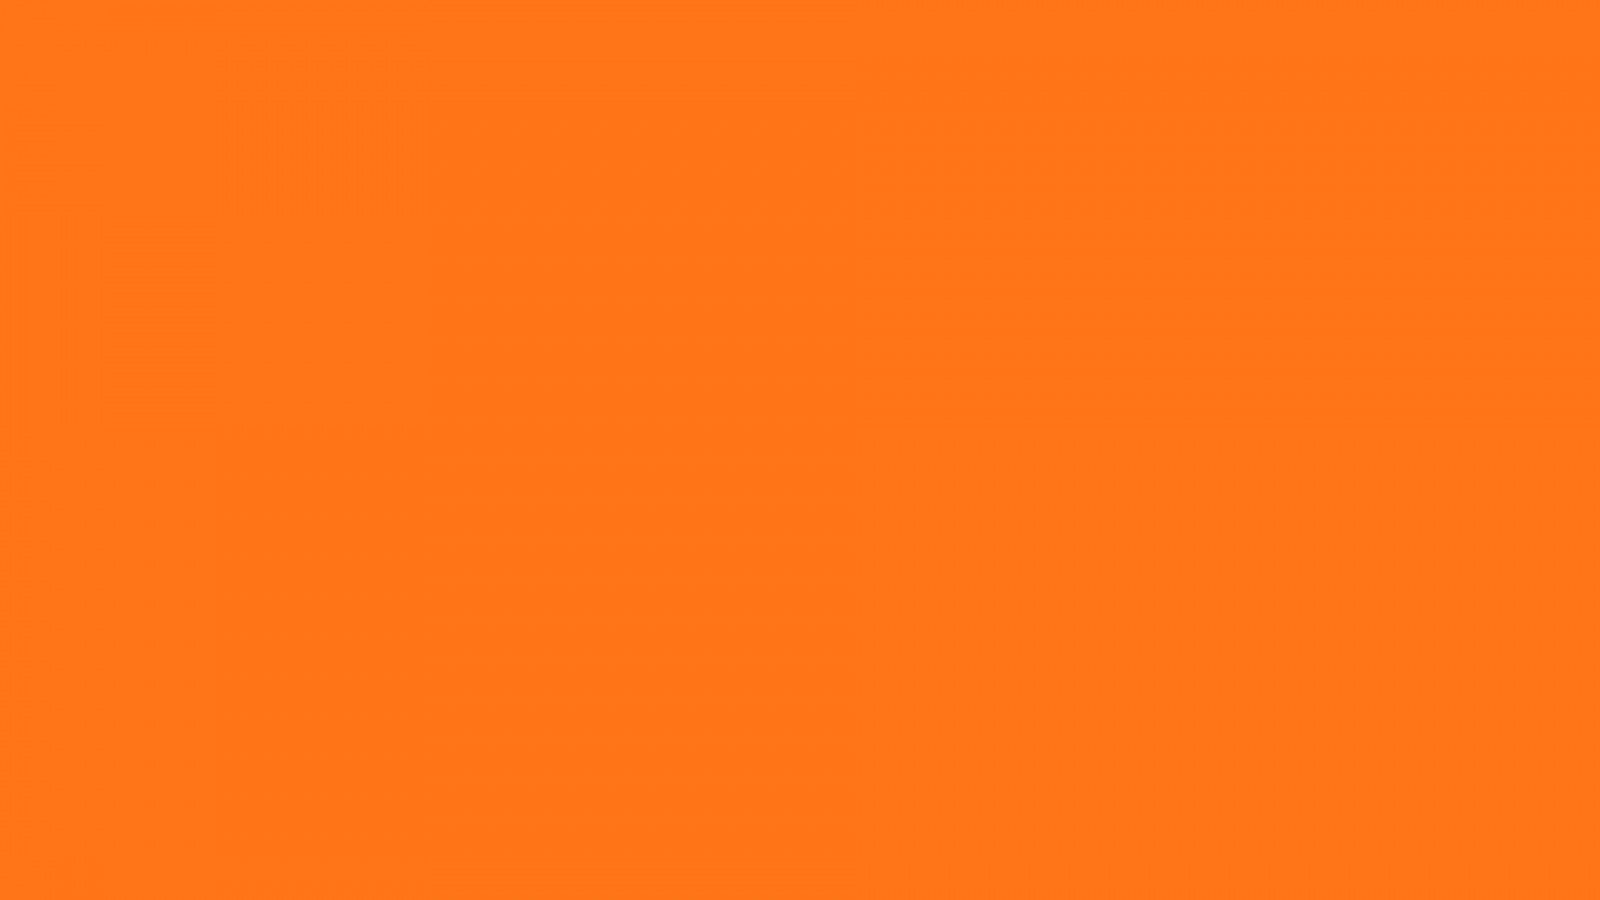 Plain Orange HD Orange Aesthetic Wallpaper